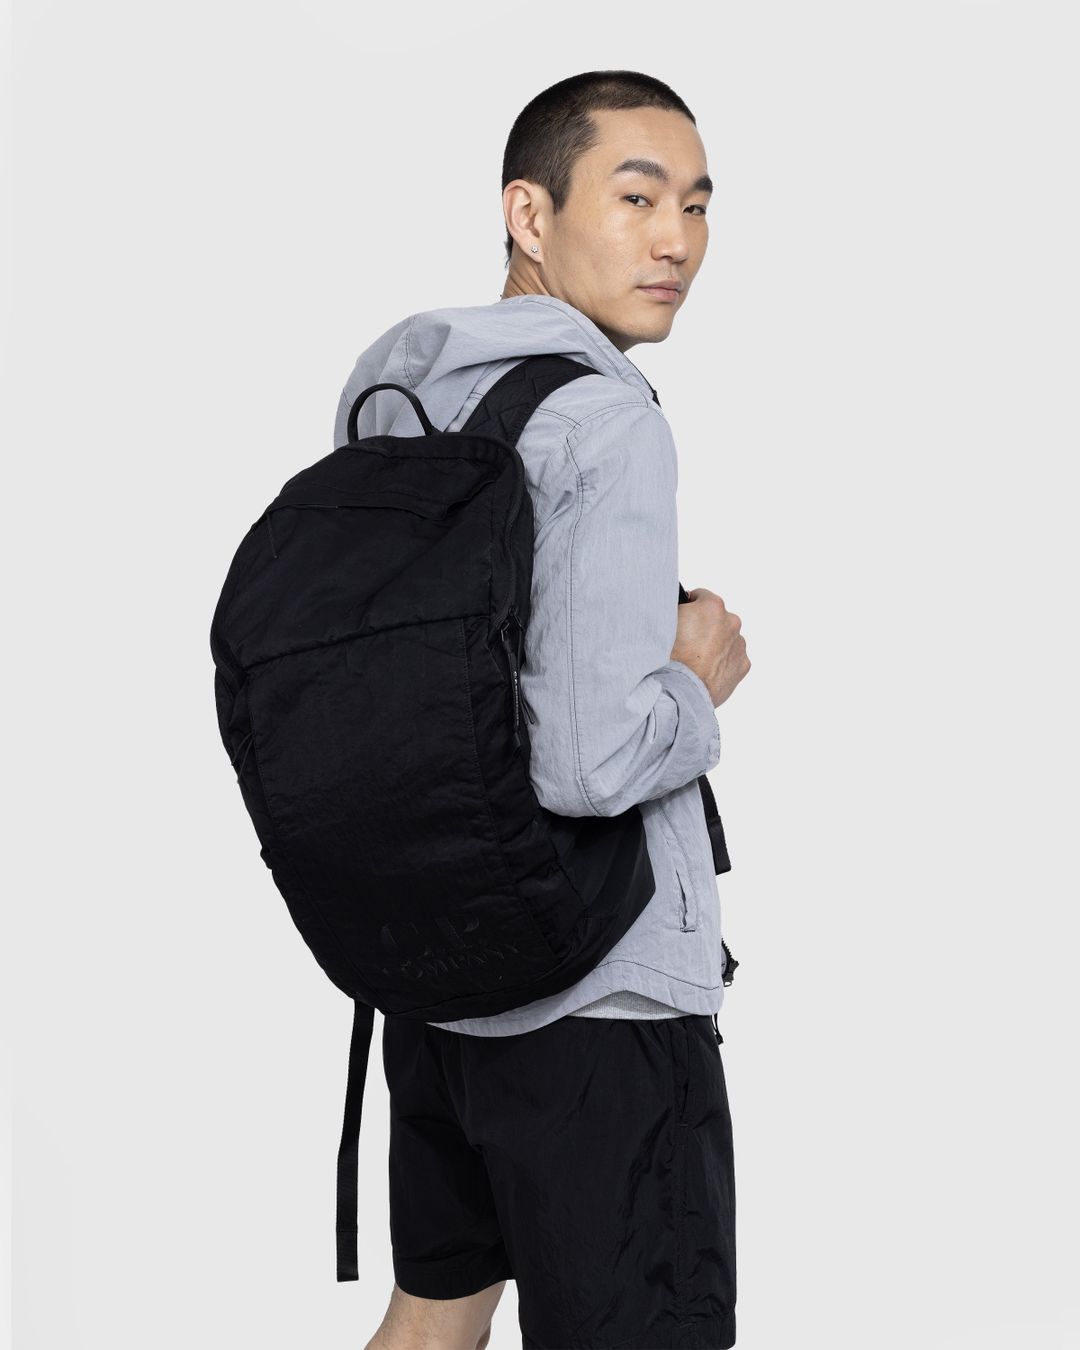 C.P. Company – Nylon B Backpack Black | Highsnobiety Shop